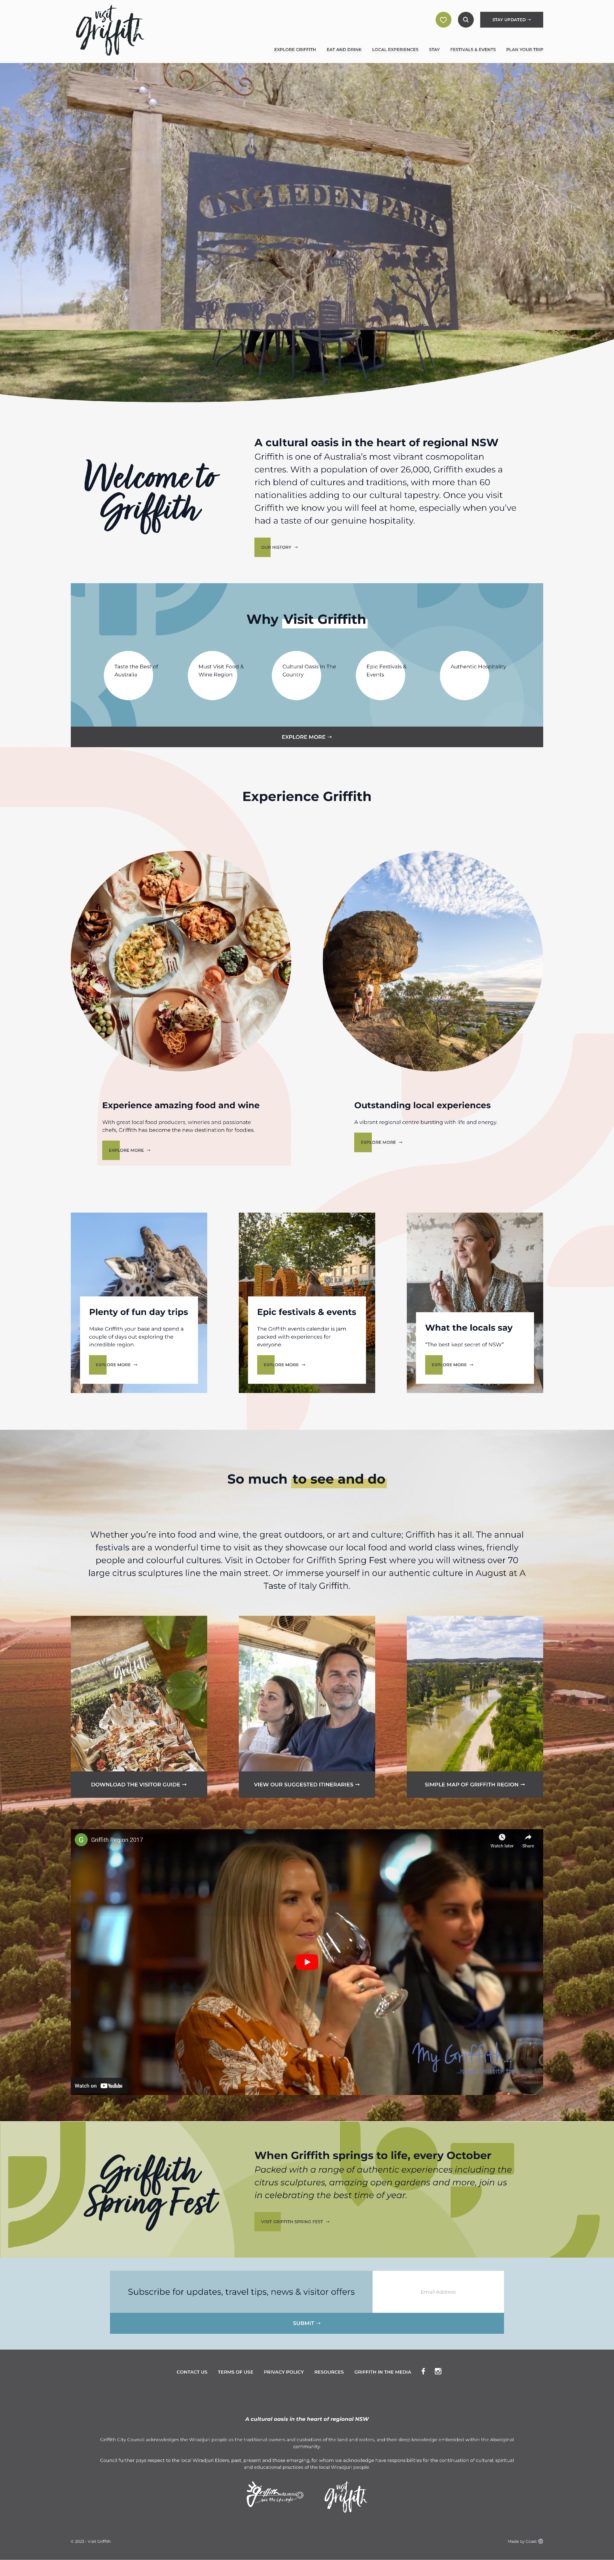 Website Design & Development for Destination Tourism Website for Visit Griffith